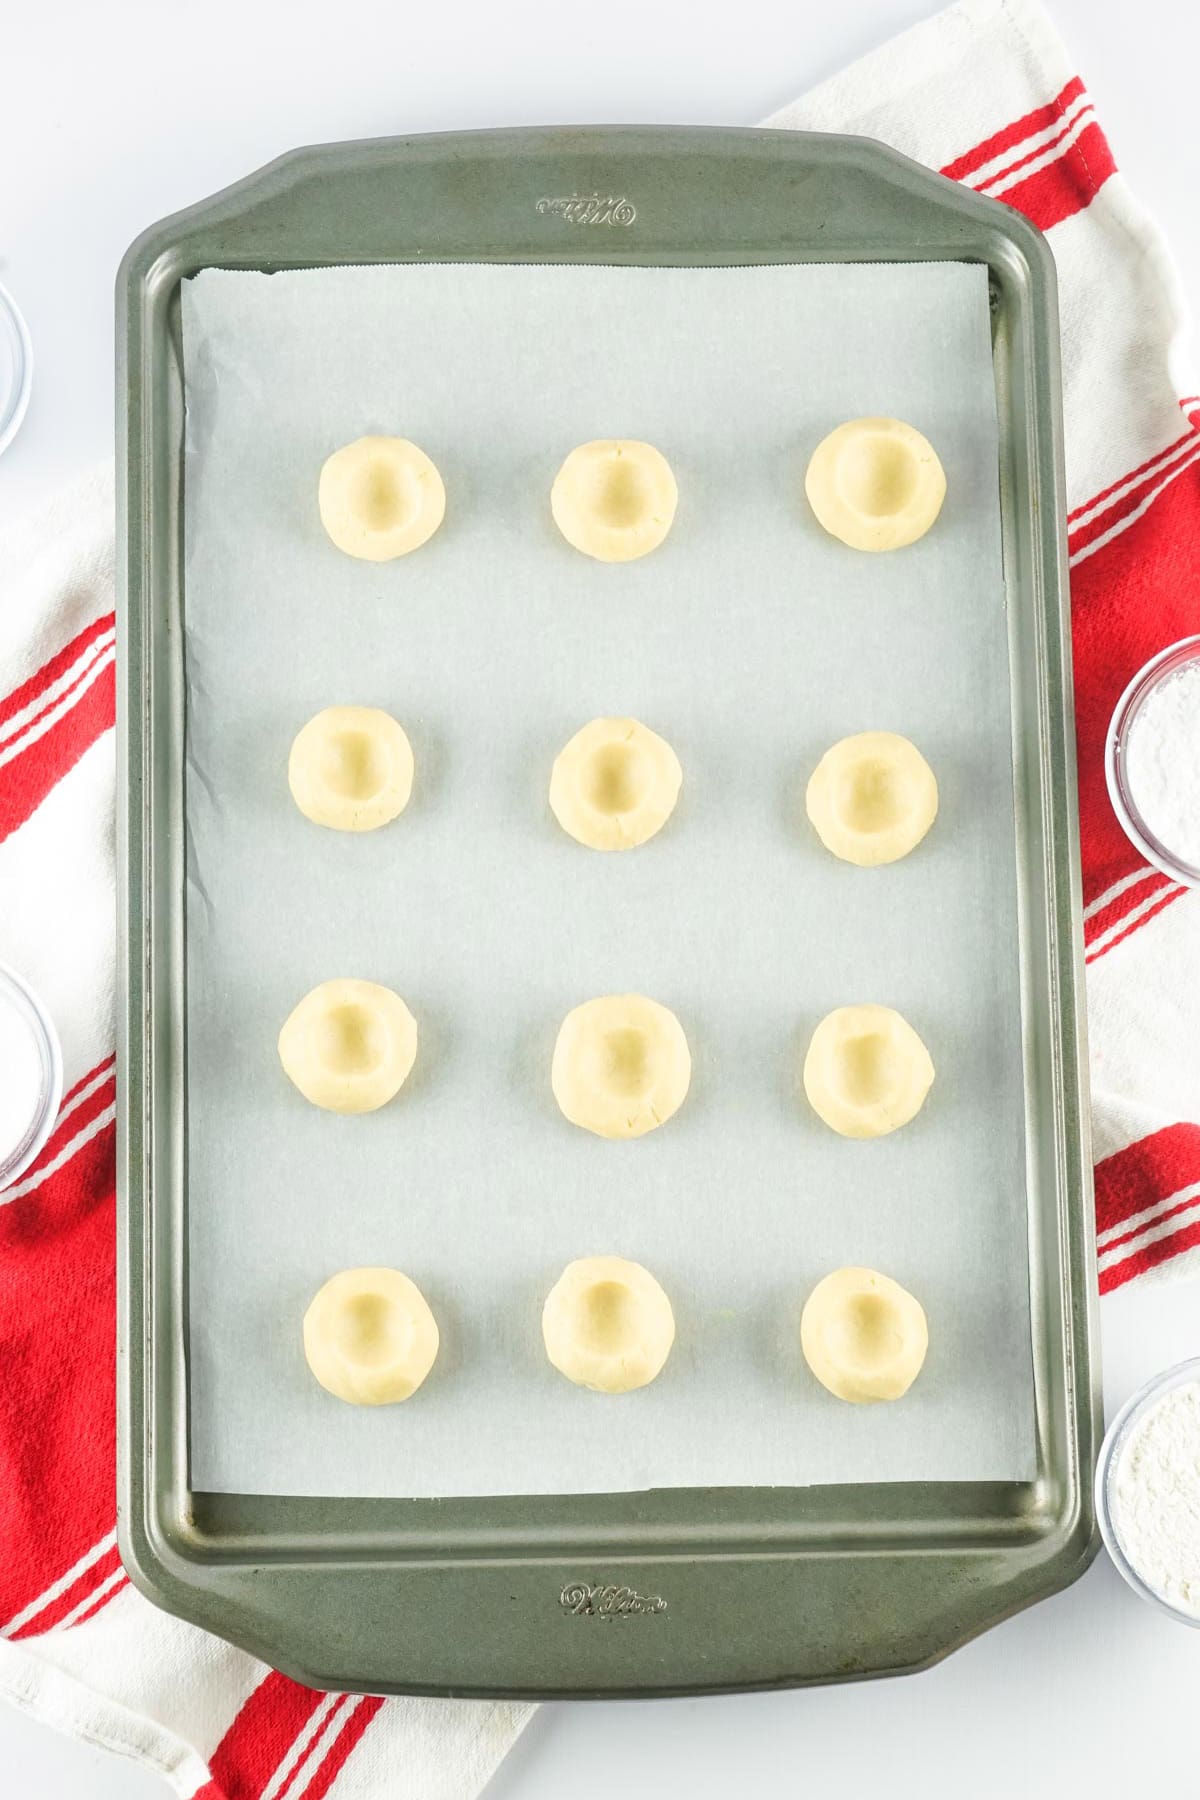 thumbprint cookies on a baking sheet